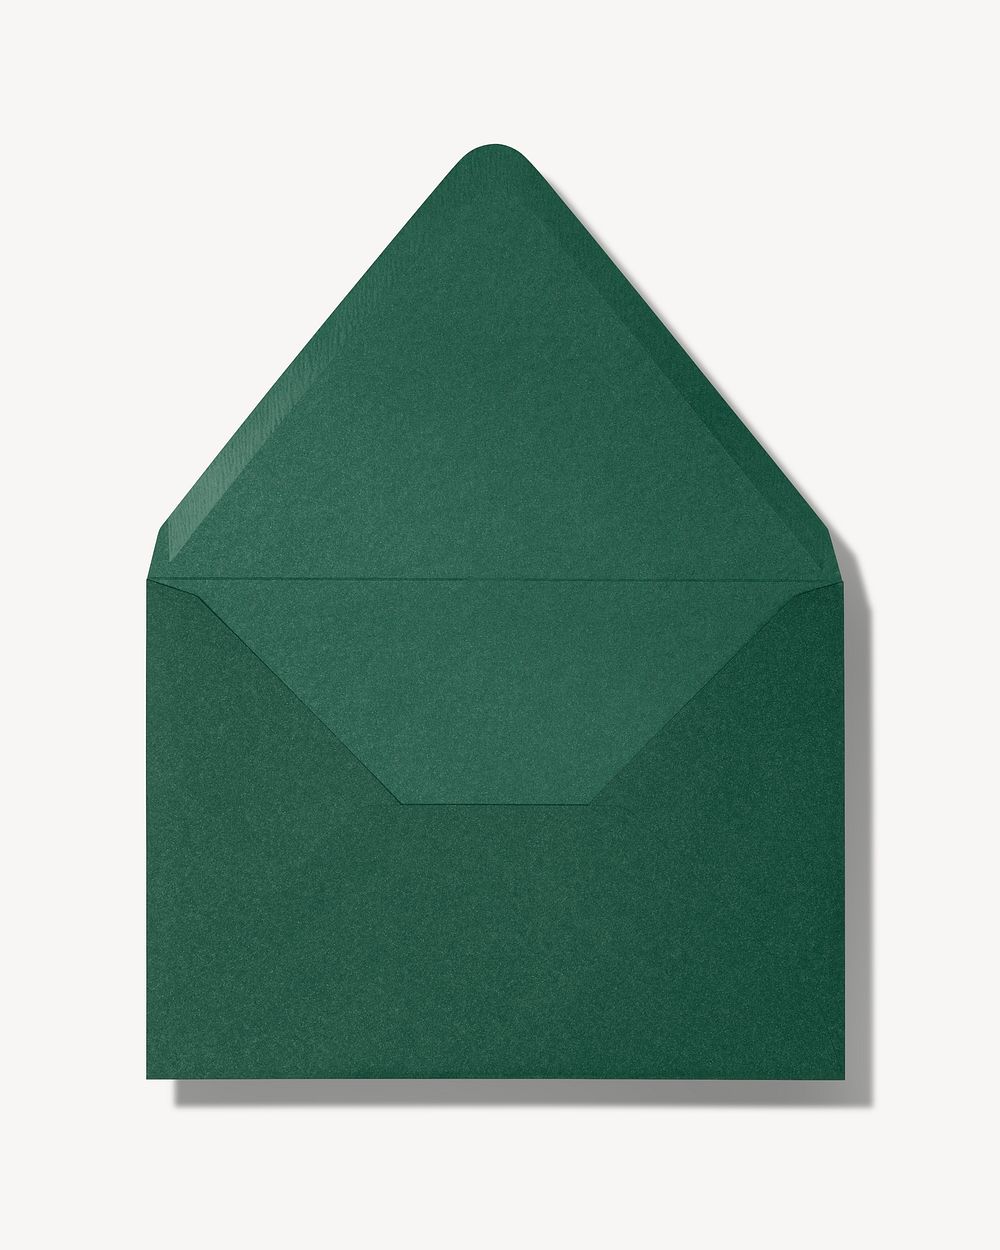 Green envelope mockup, stationery flat lay design psd